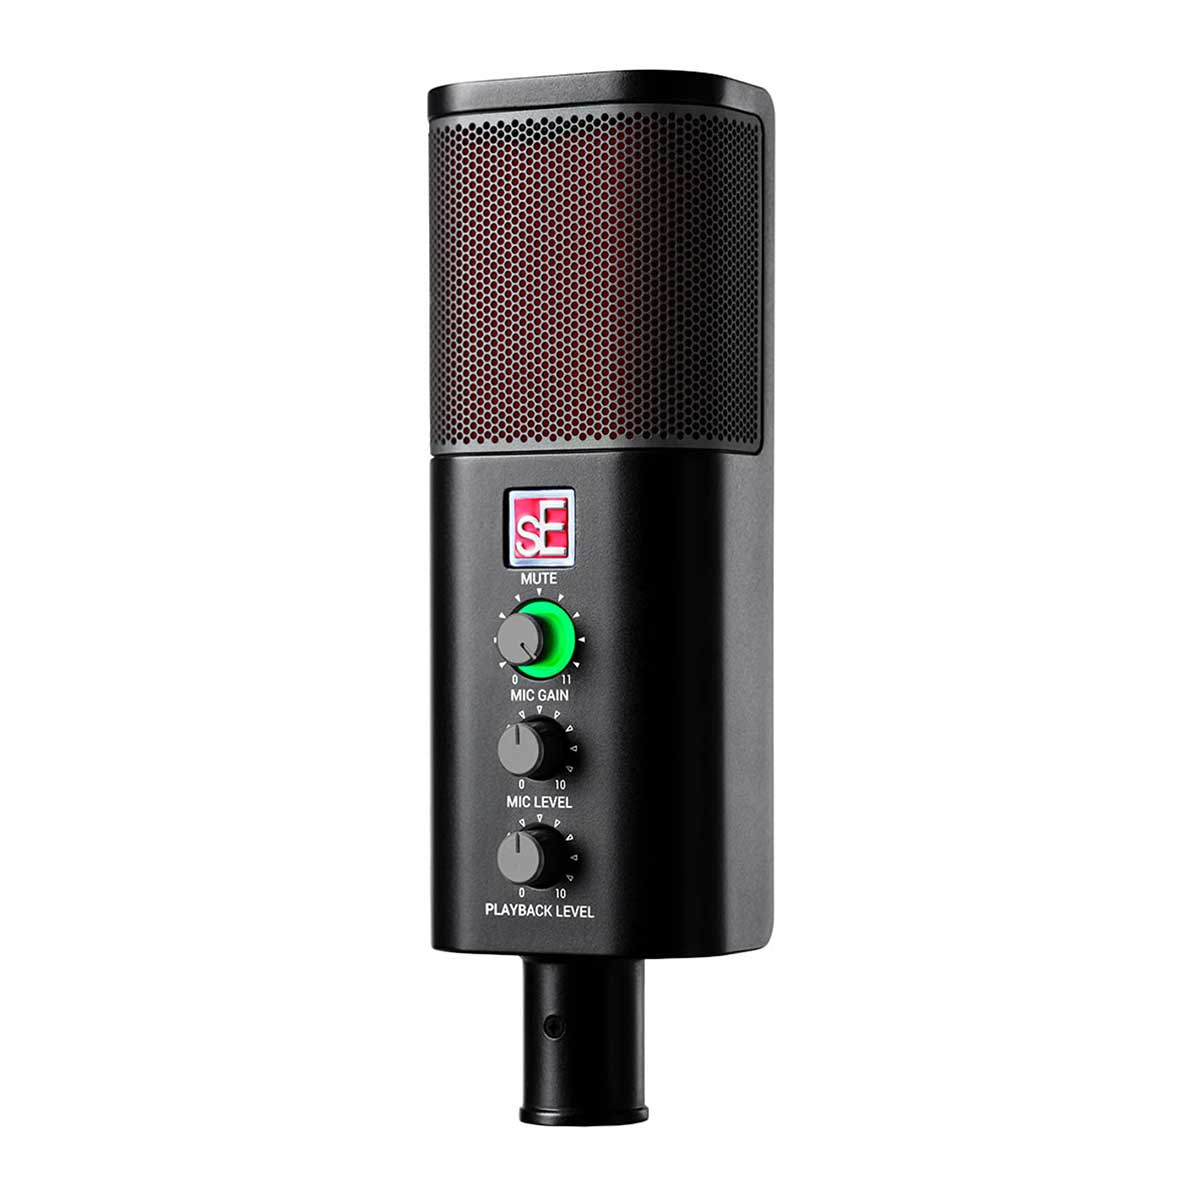 sE Electronics NEOM USB Cardioid Condenser Microphone